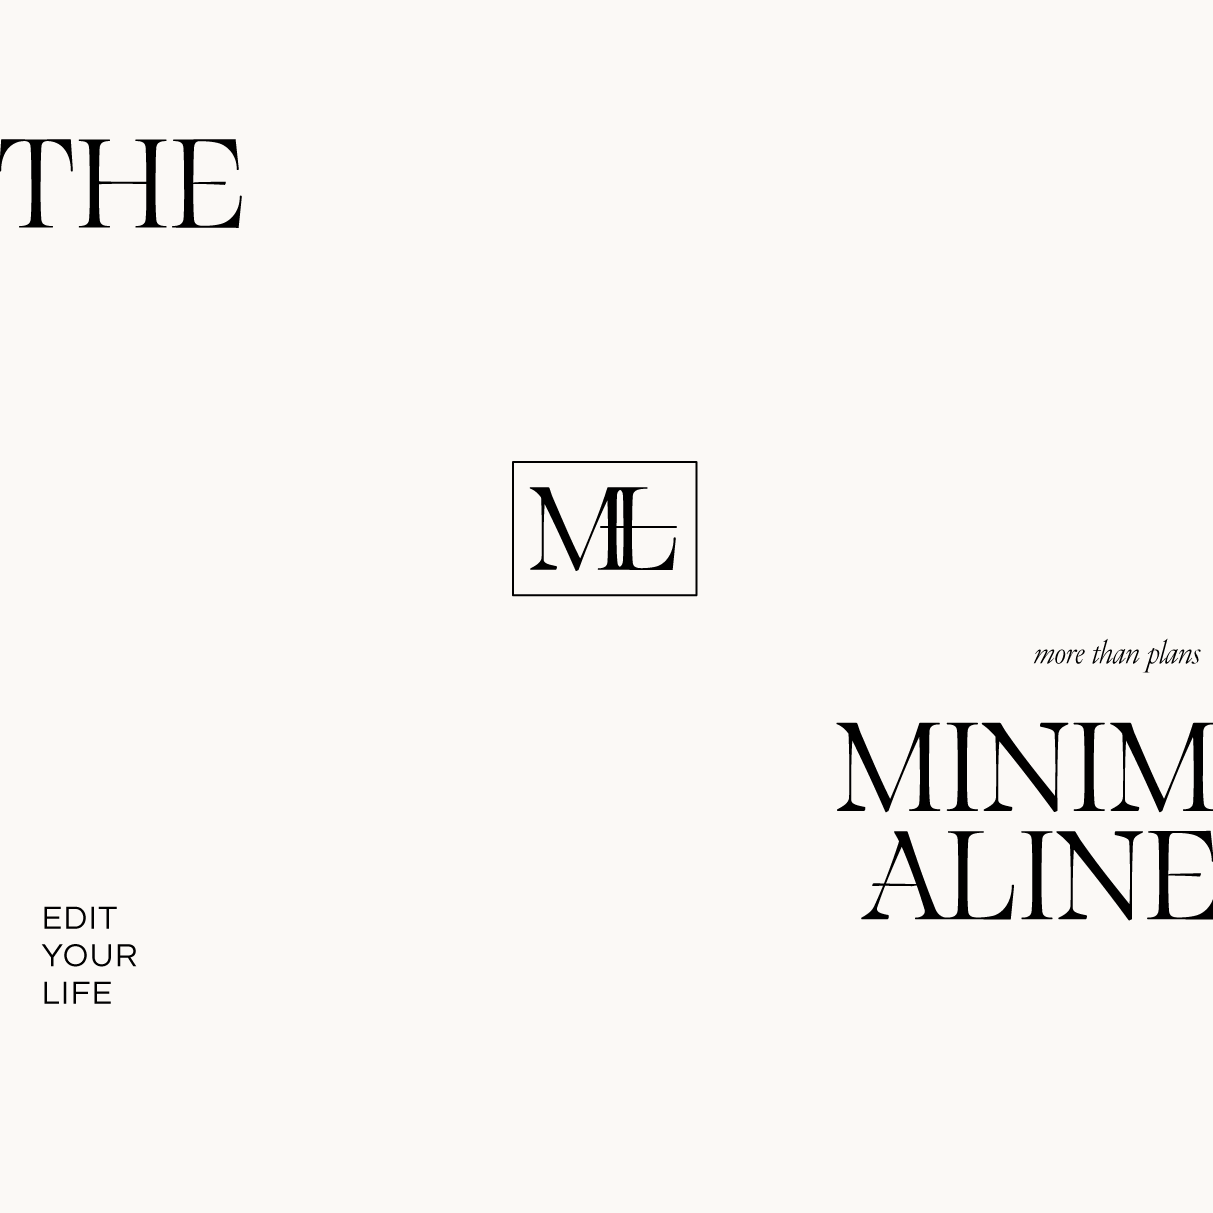 The minimaline-05 copy